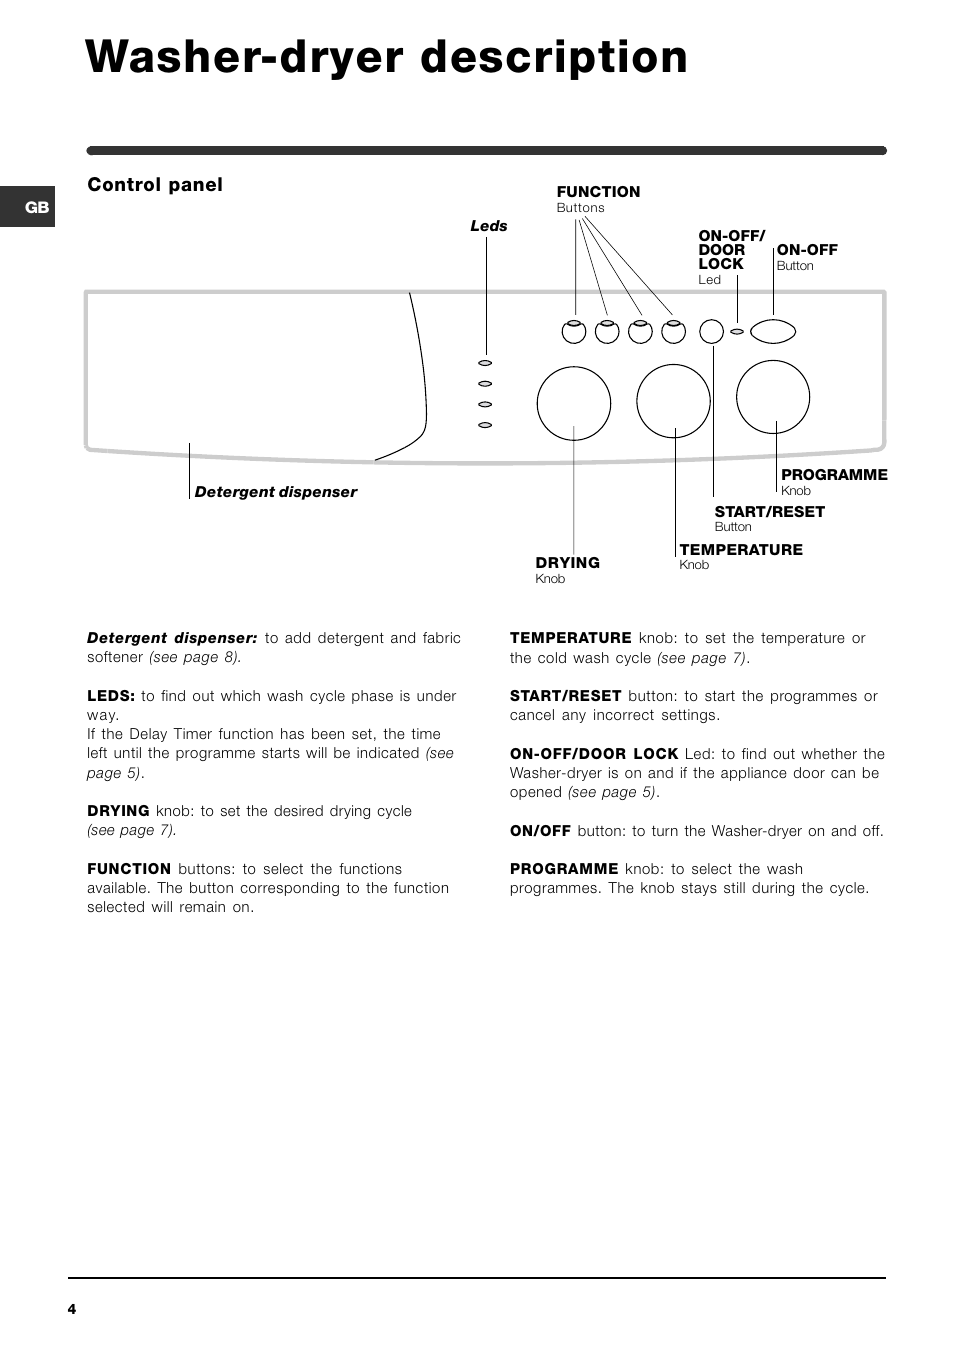 Washer-dryer description, Control panel | Indesit WIDL 126 S User Manual |  Page 4 / 48 | Original mode